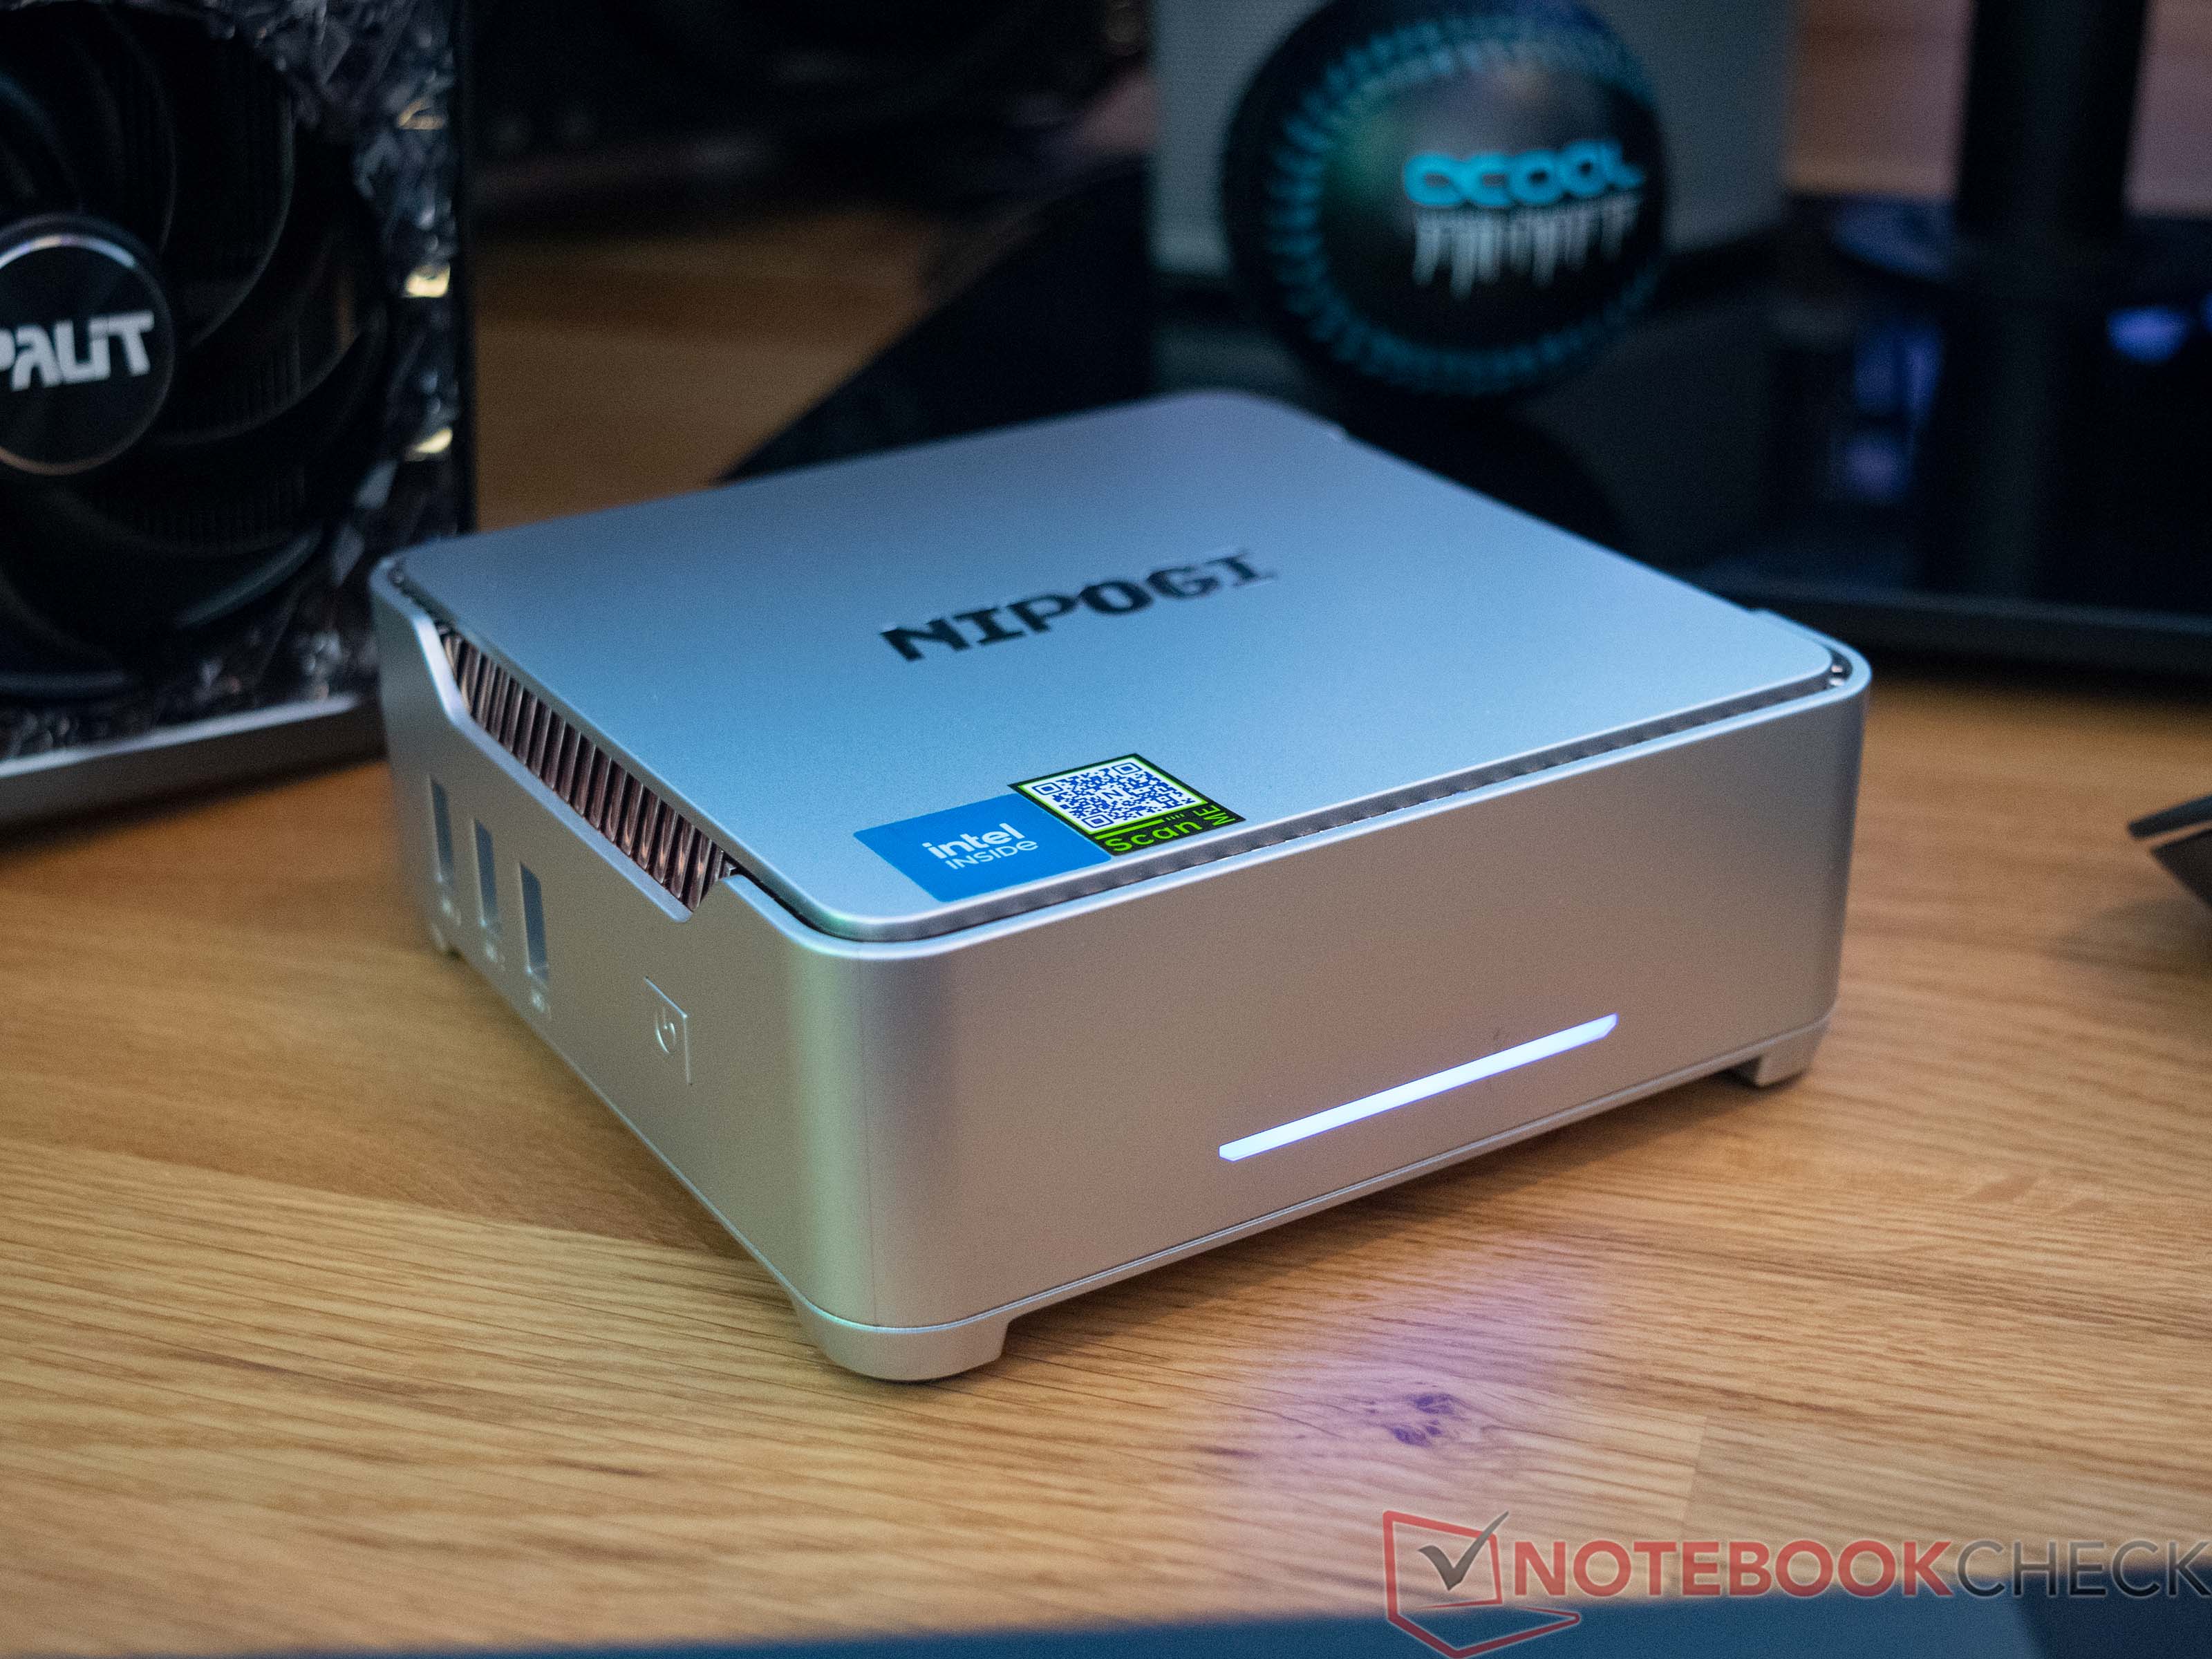 NiPoGi Mini PC, 12th Intel Alder Lake-Ν95 (up to 3.4GHz) 8GB RAM